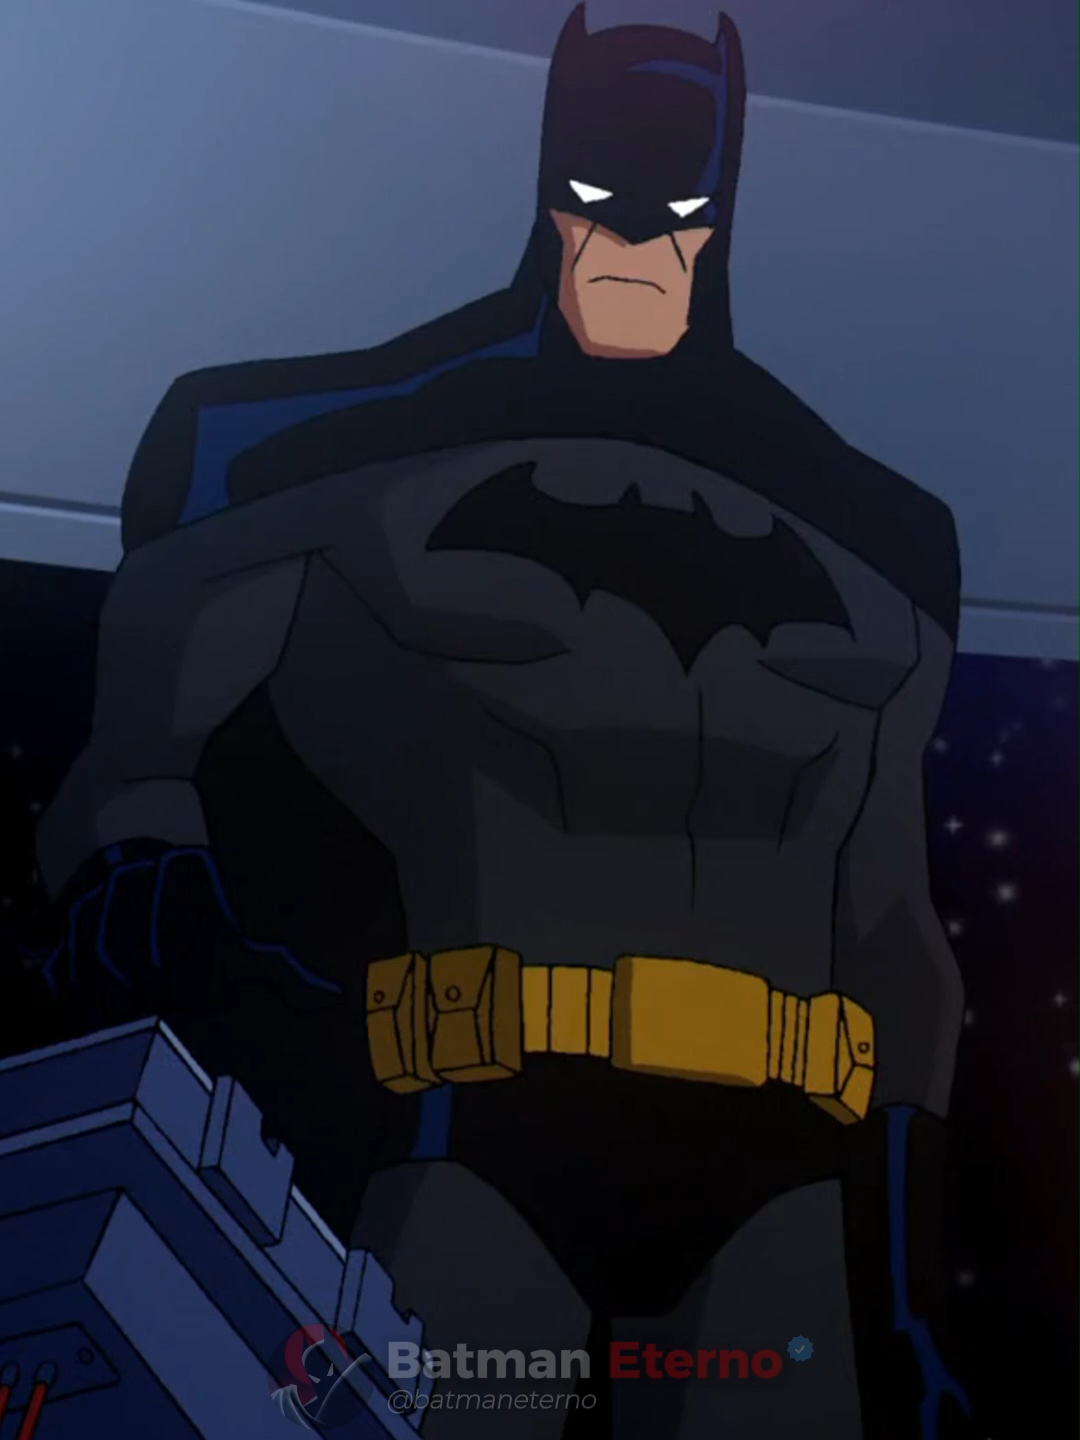 Batman testa o teleportador no Flash #batman #flash #mulhermaravilha #jonnjonzz #caçadordemarte #ligadajustiçacriseemduasterras